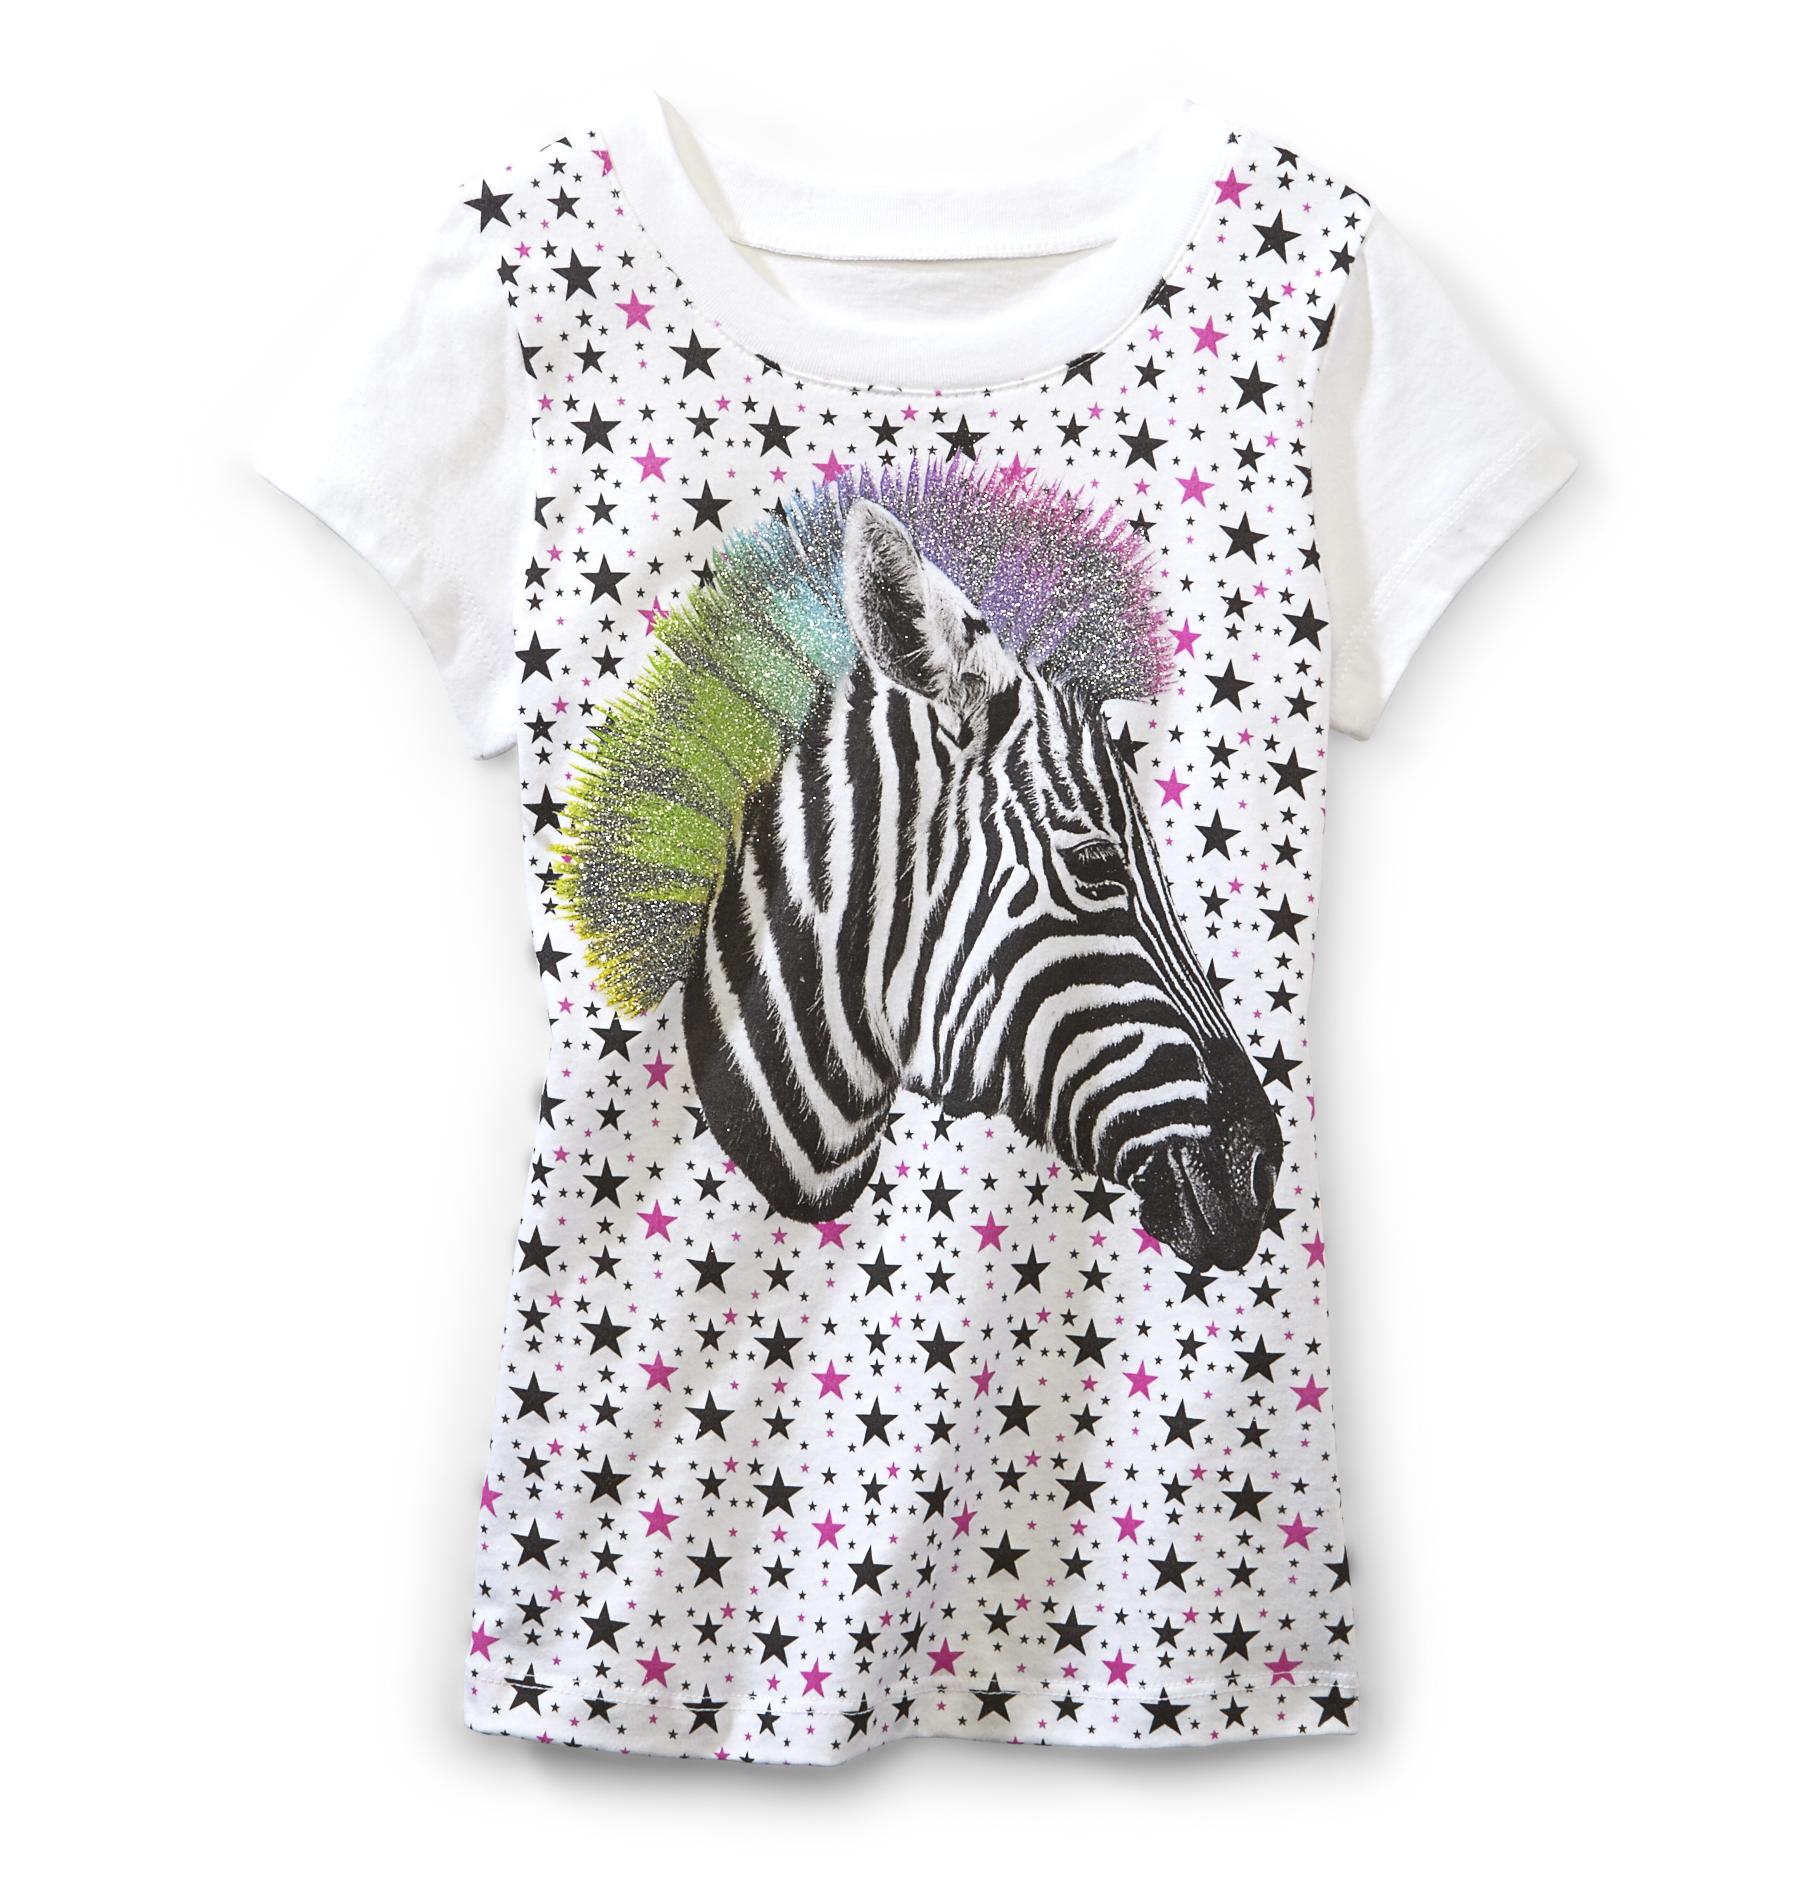 Route 66 Girl's Graphic T-Shirt - Zebra